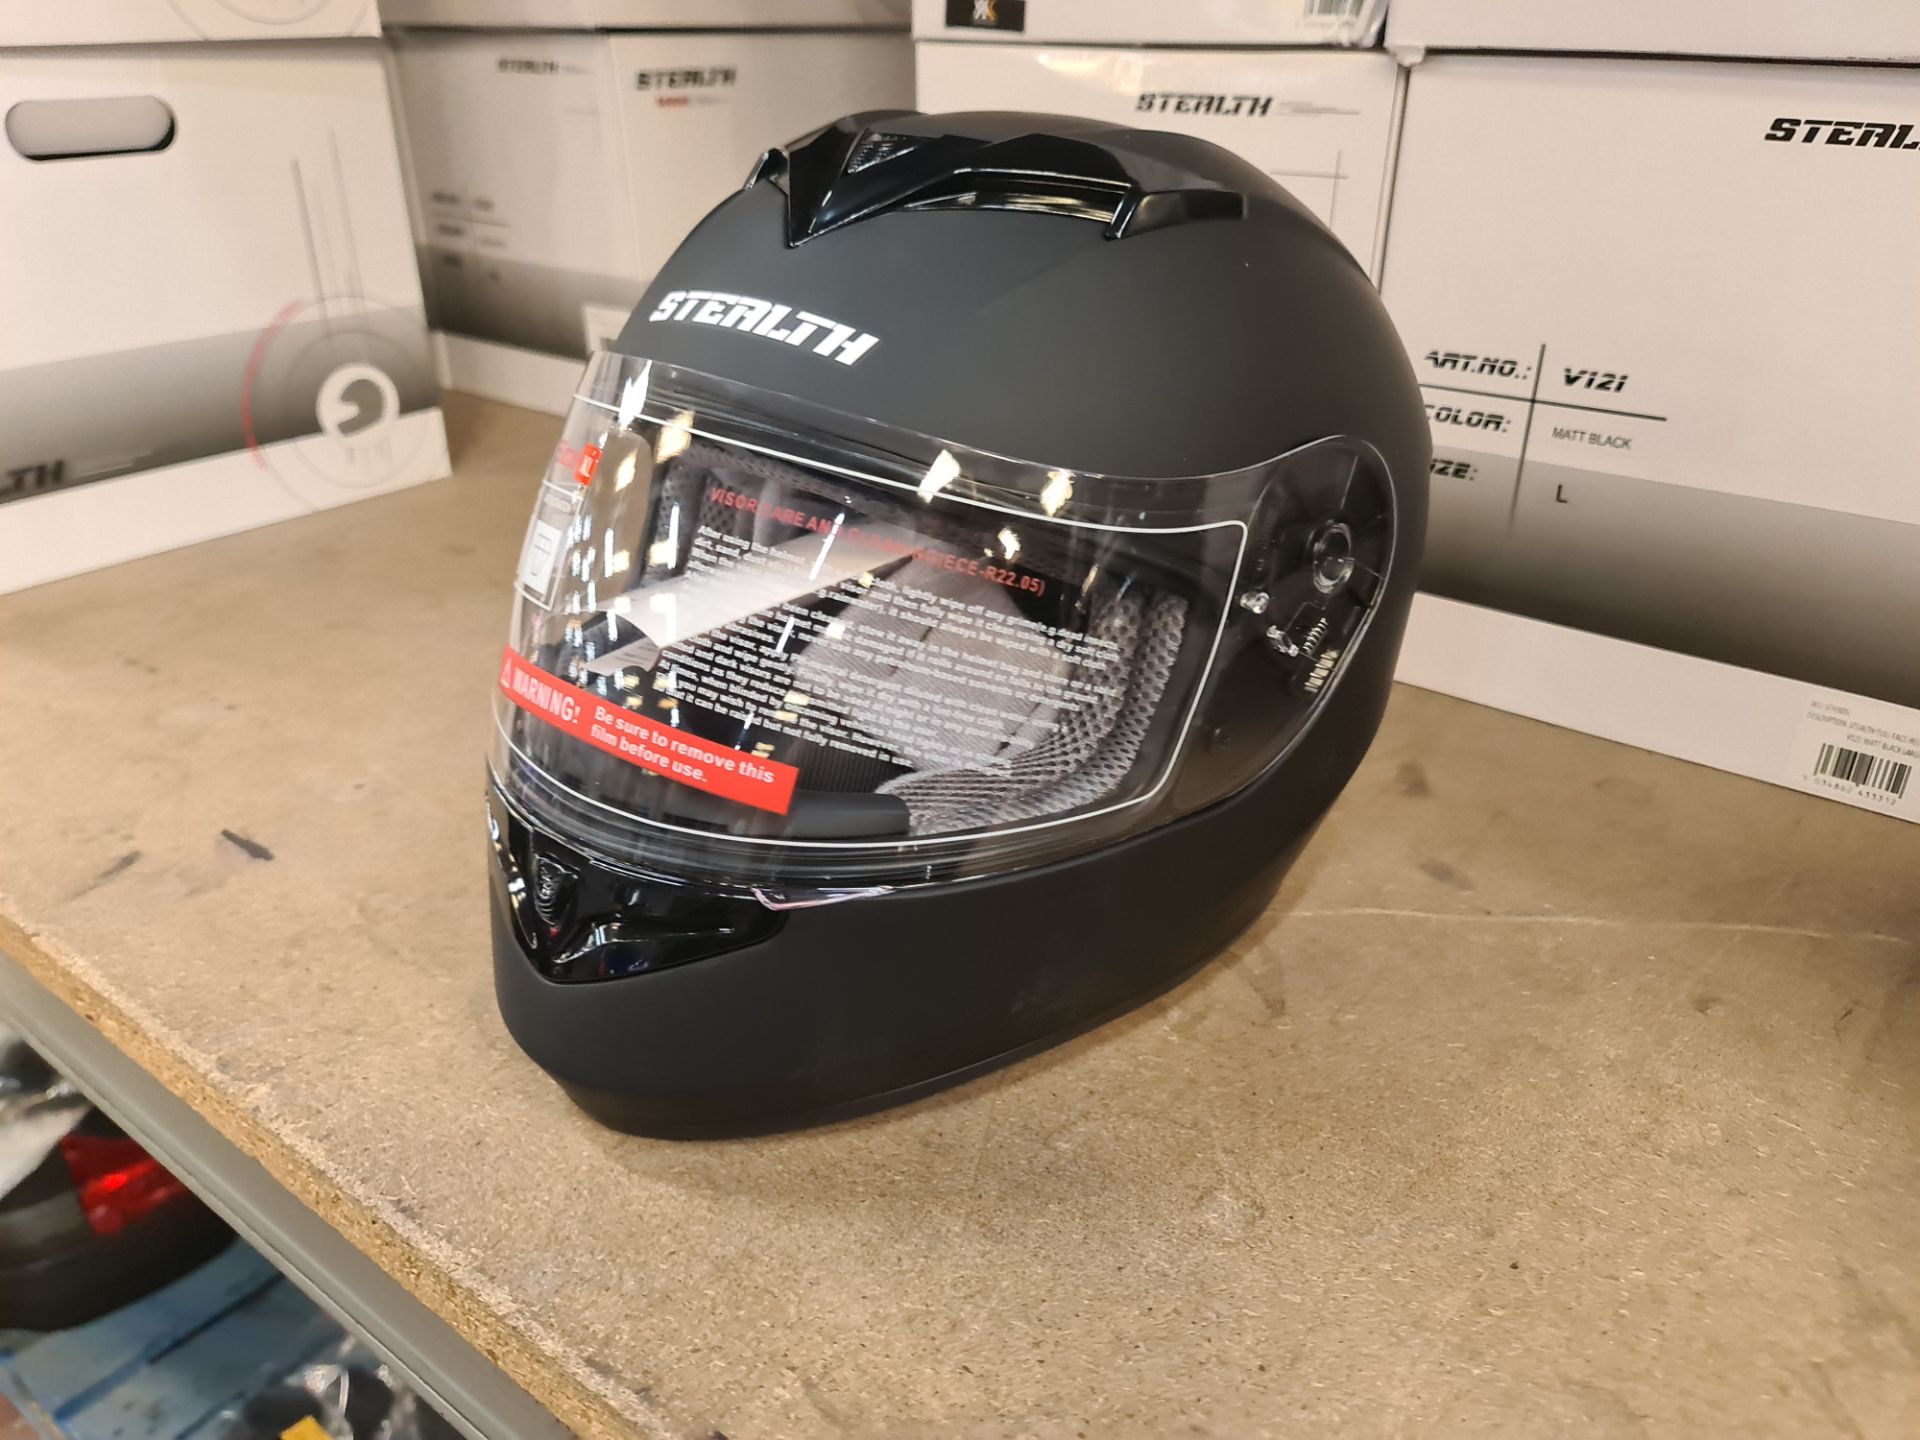 5 off Stealth V121 matt black helmets - 2xM, 2xL, 1xXL - Image 2 of 7